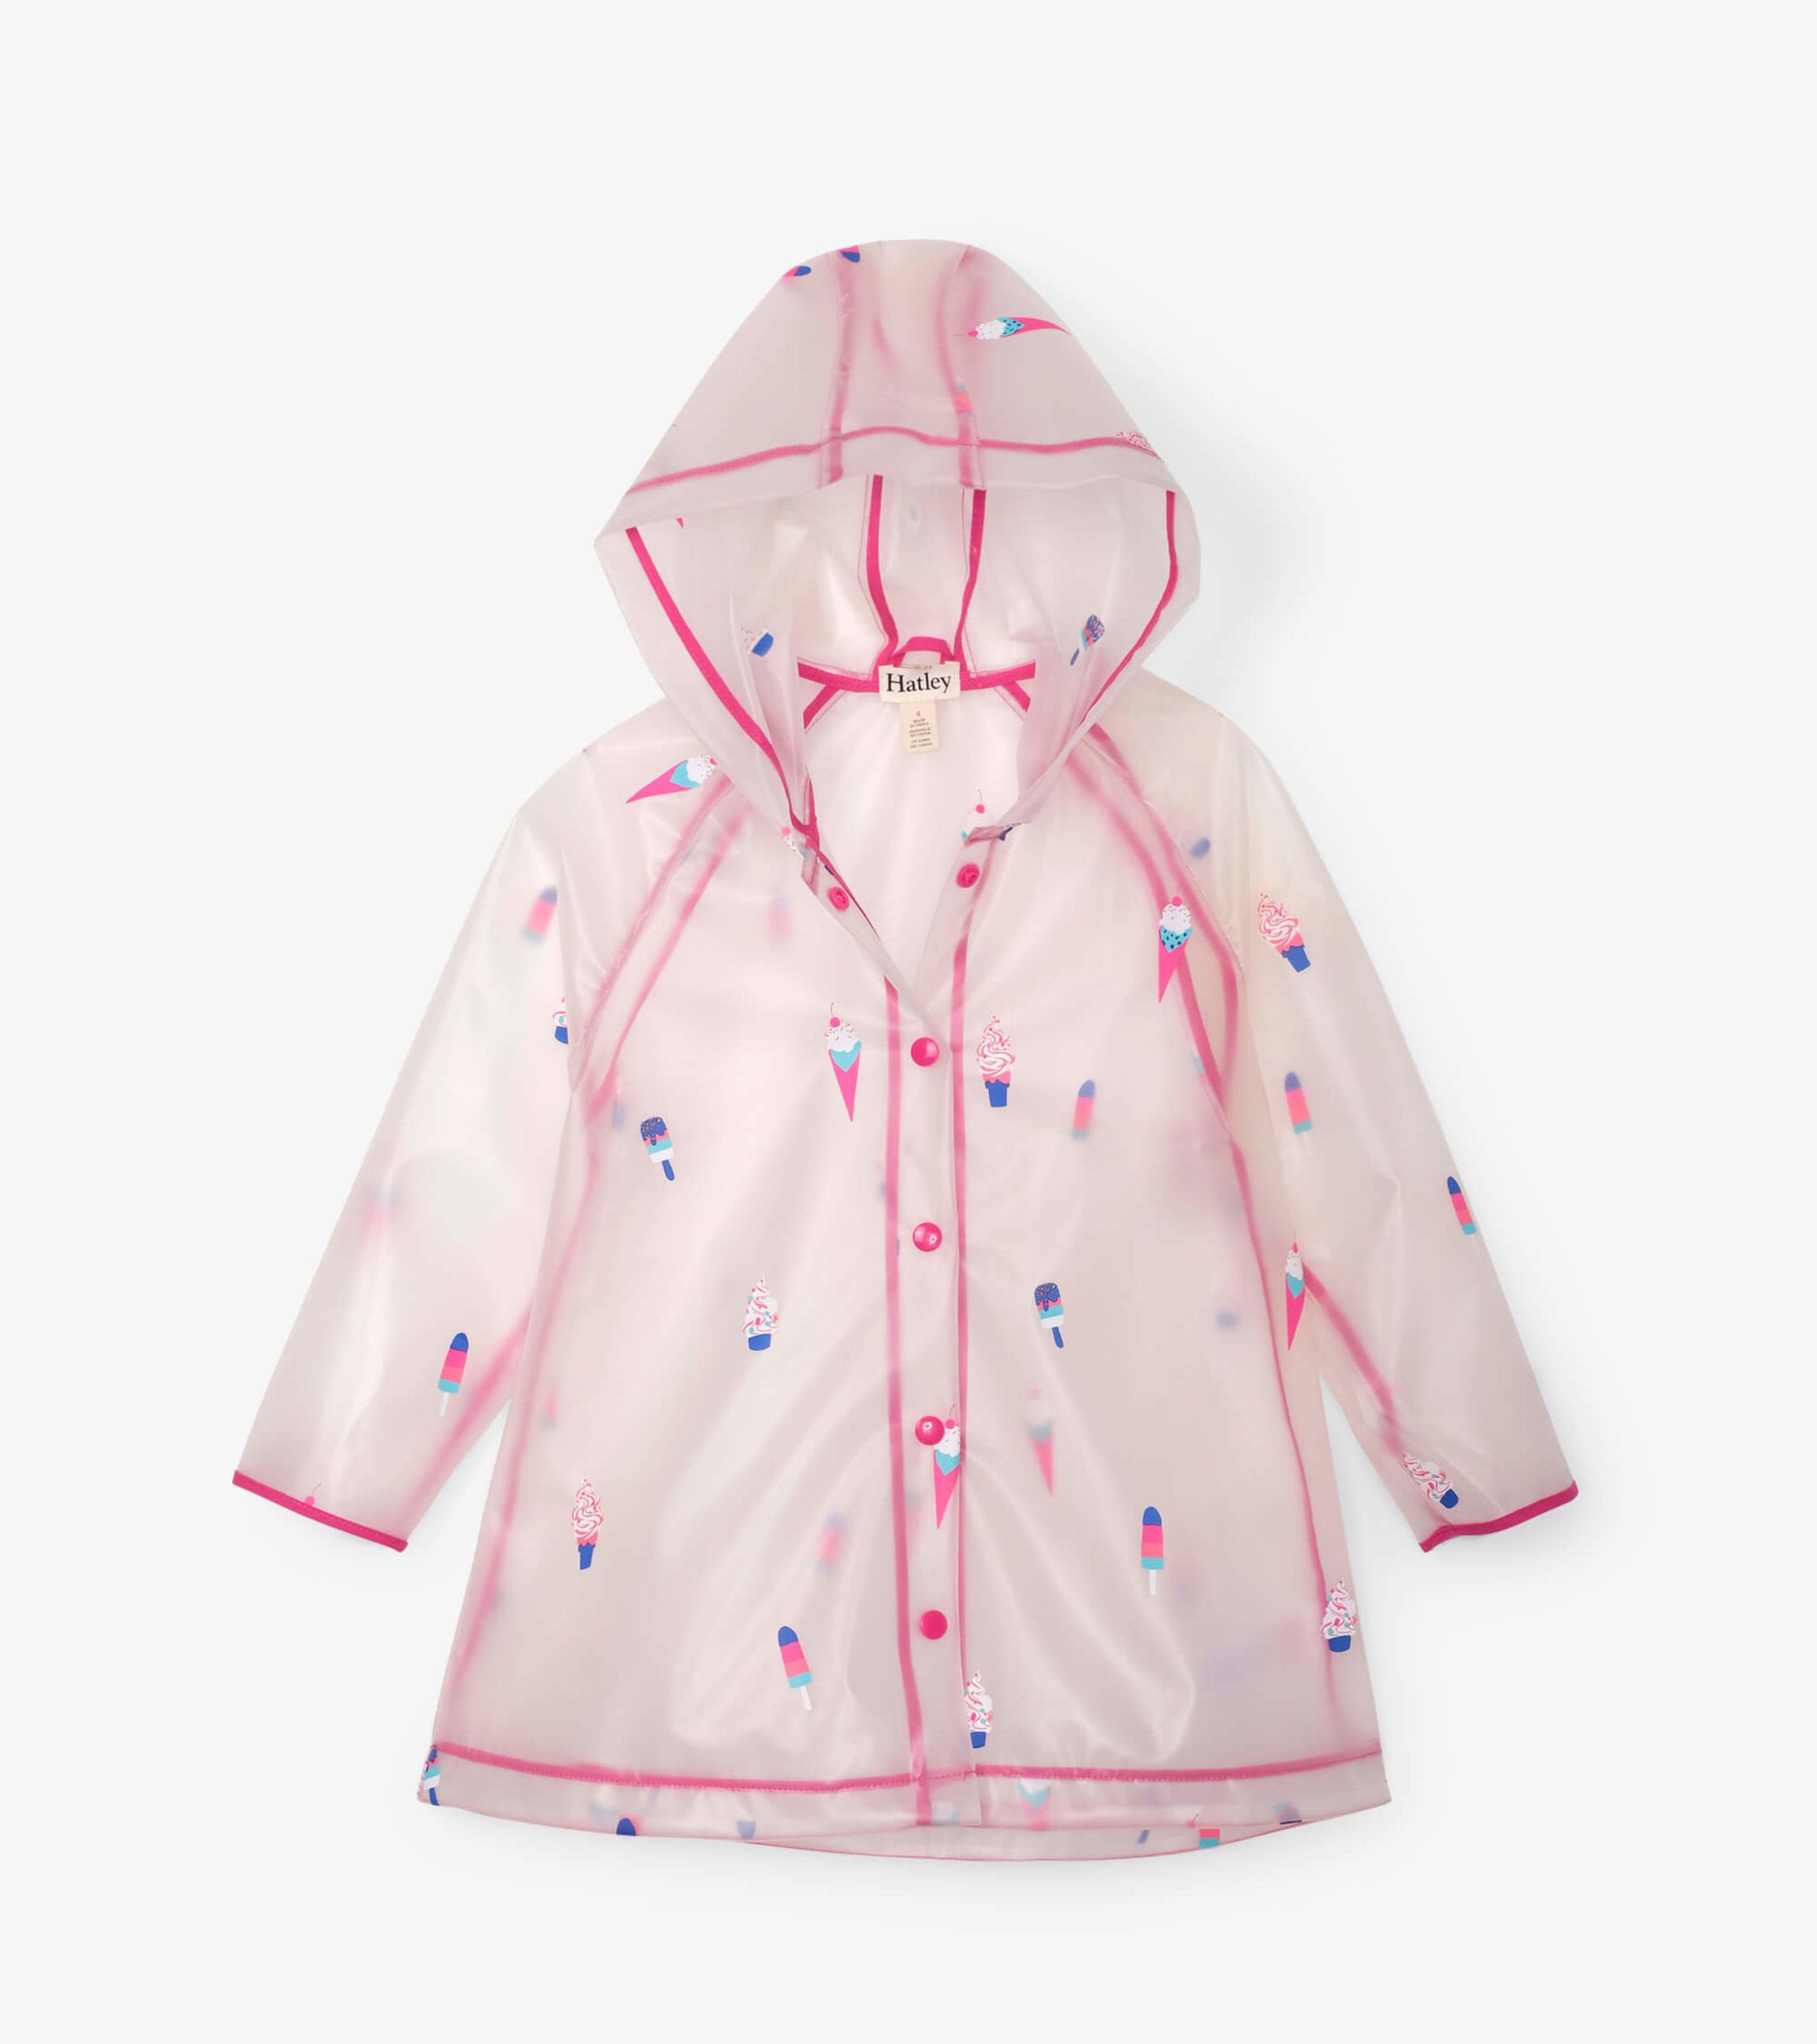 Transparent raincoat for small handbags